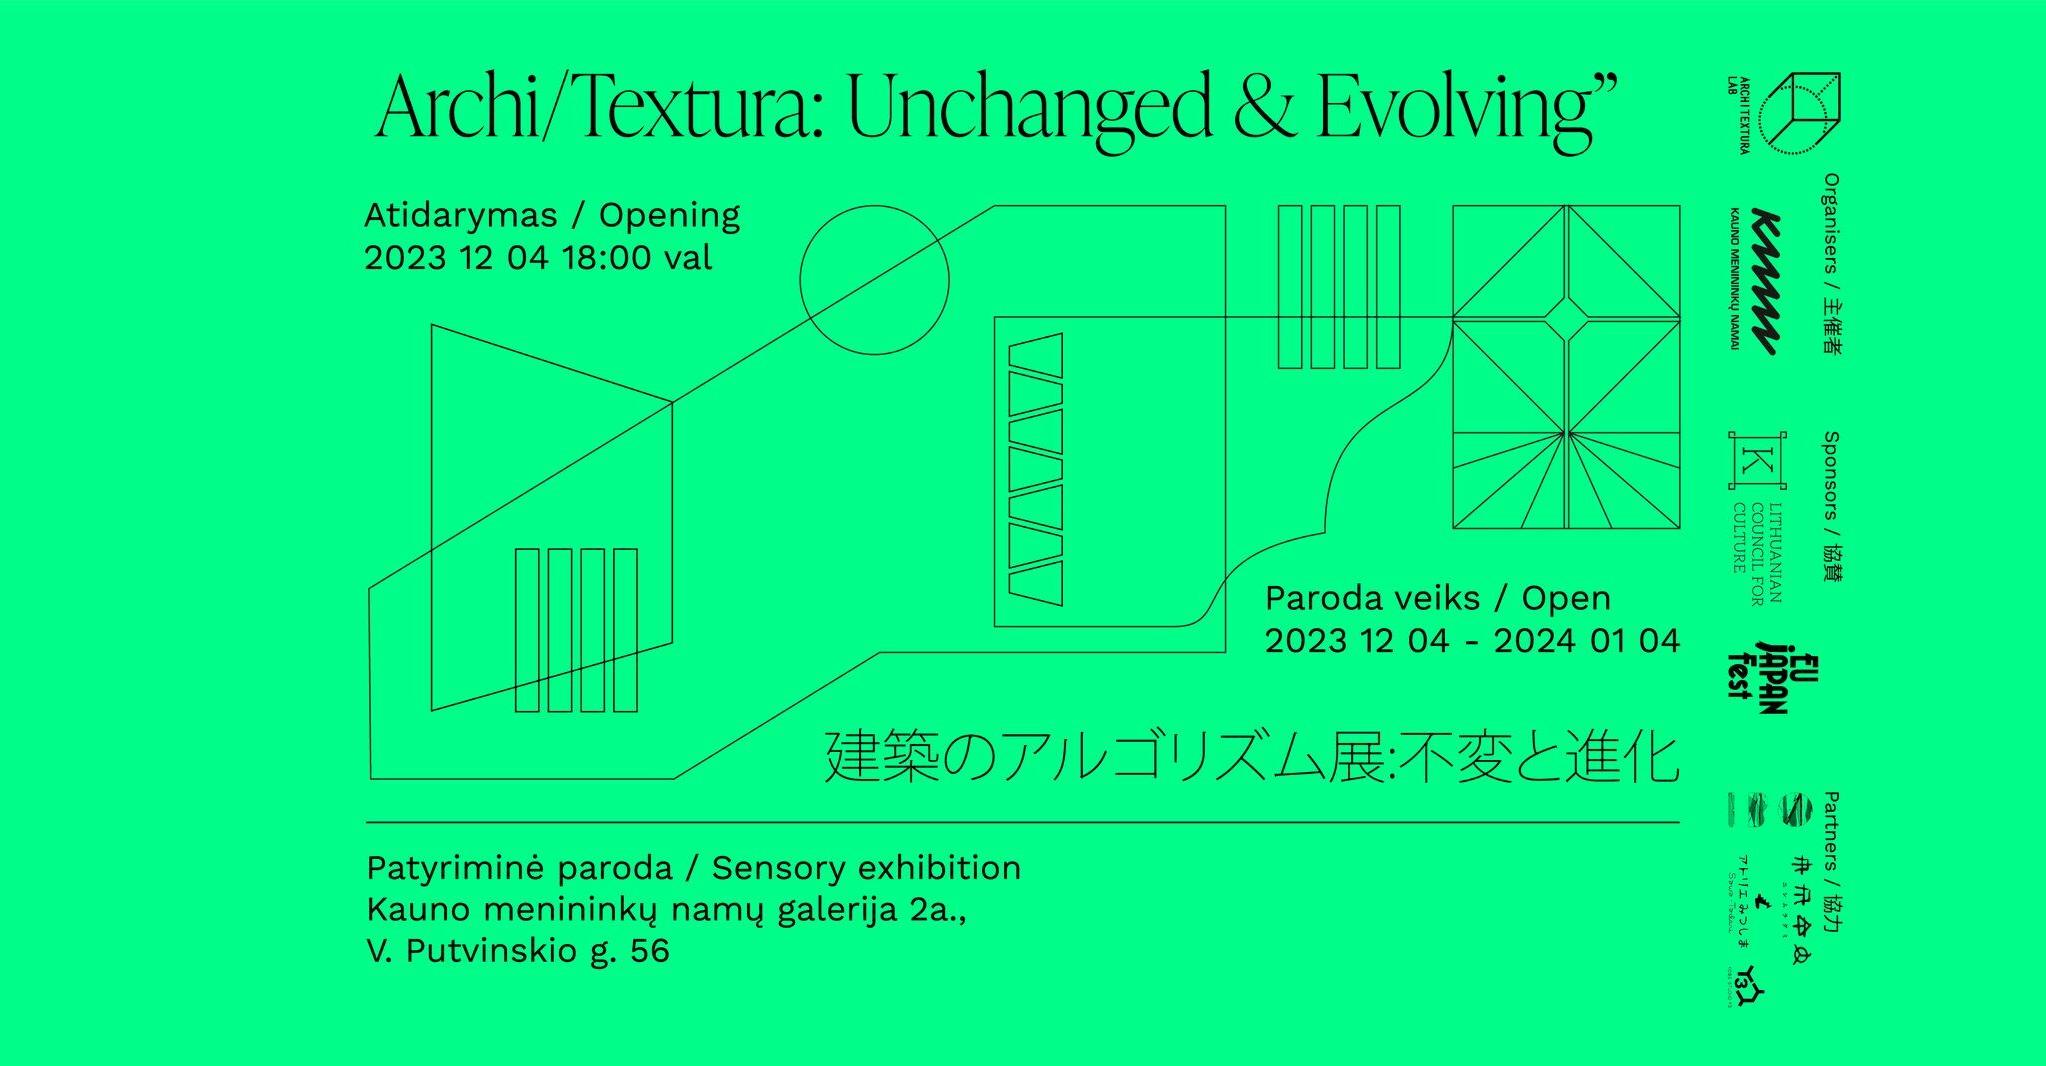 ArchiTextura: Unchanged & Evolving